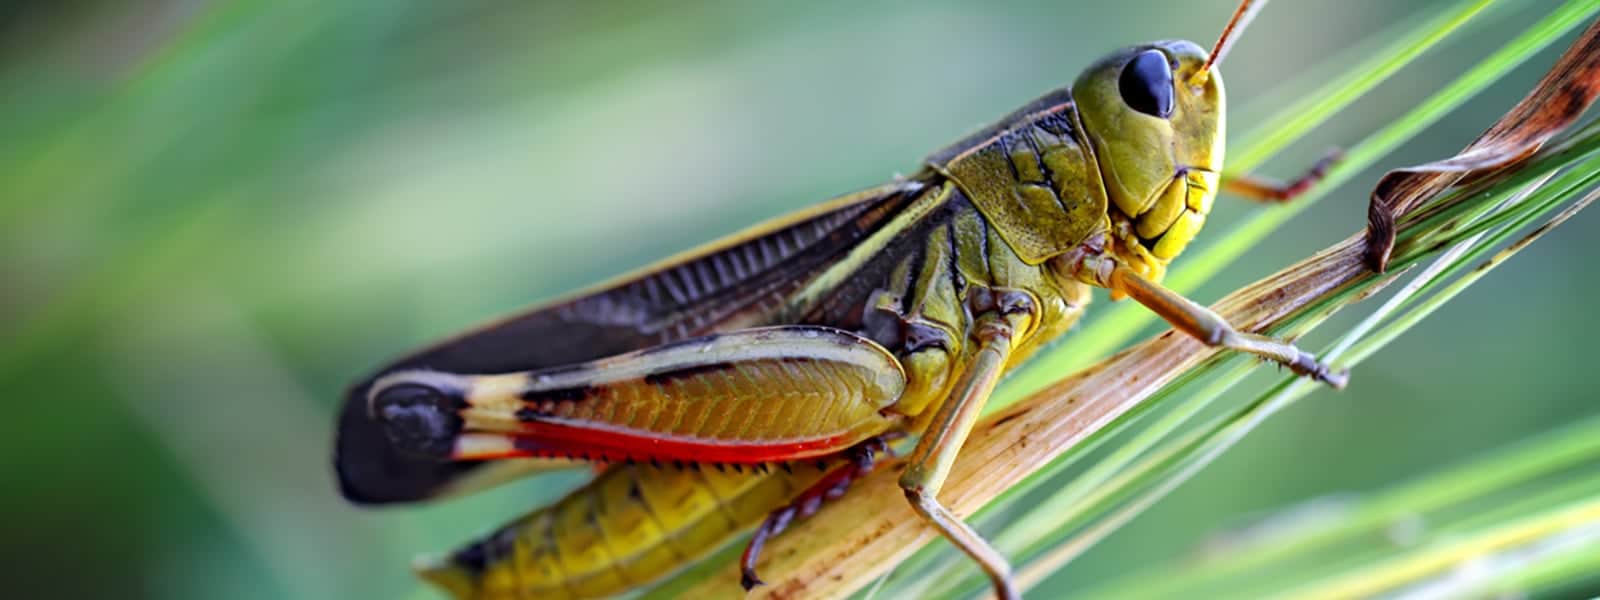 Chirping Crickets - Creepy Crawly Pest Control